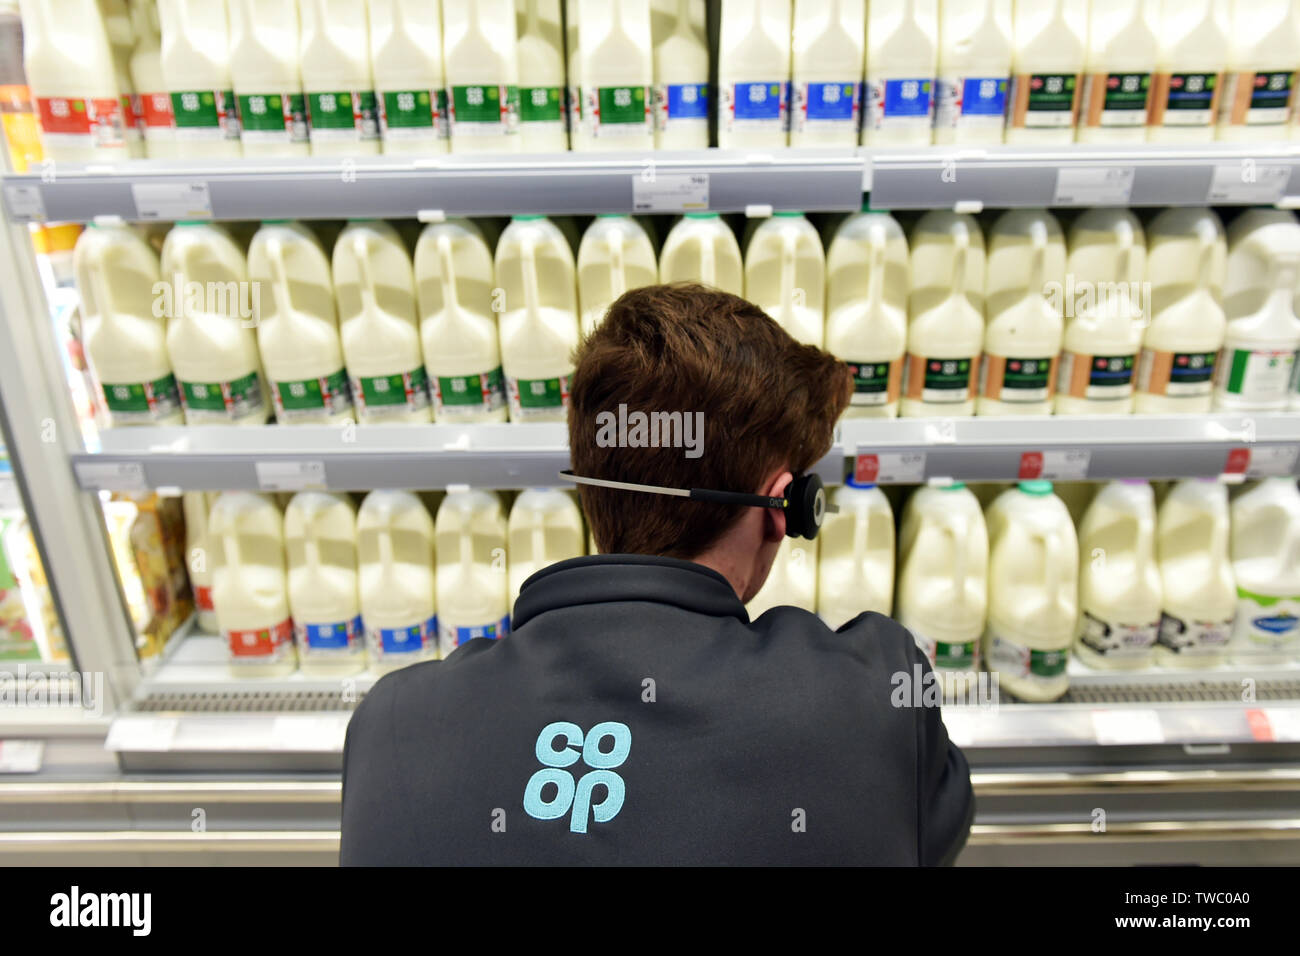 La leche se apilan en un almacén cooperativo nevera, REINO UNIDO Foto de stock